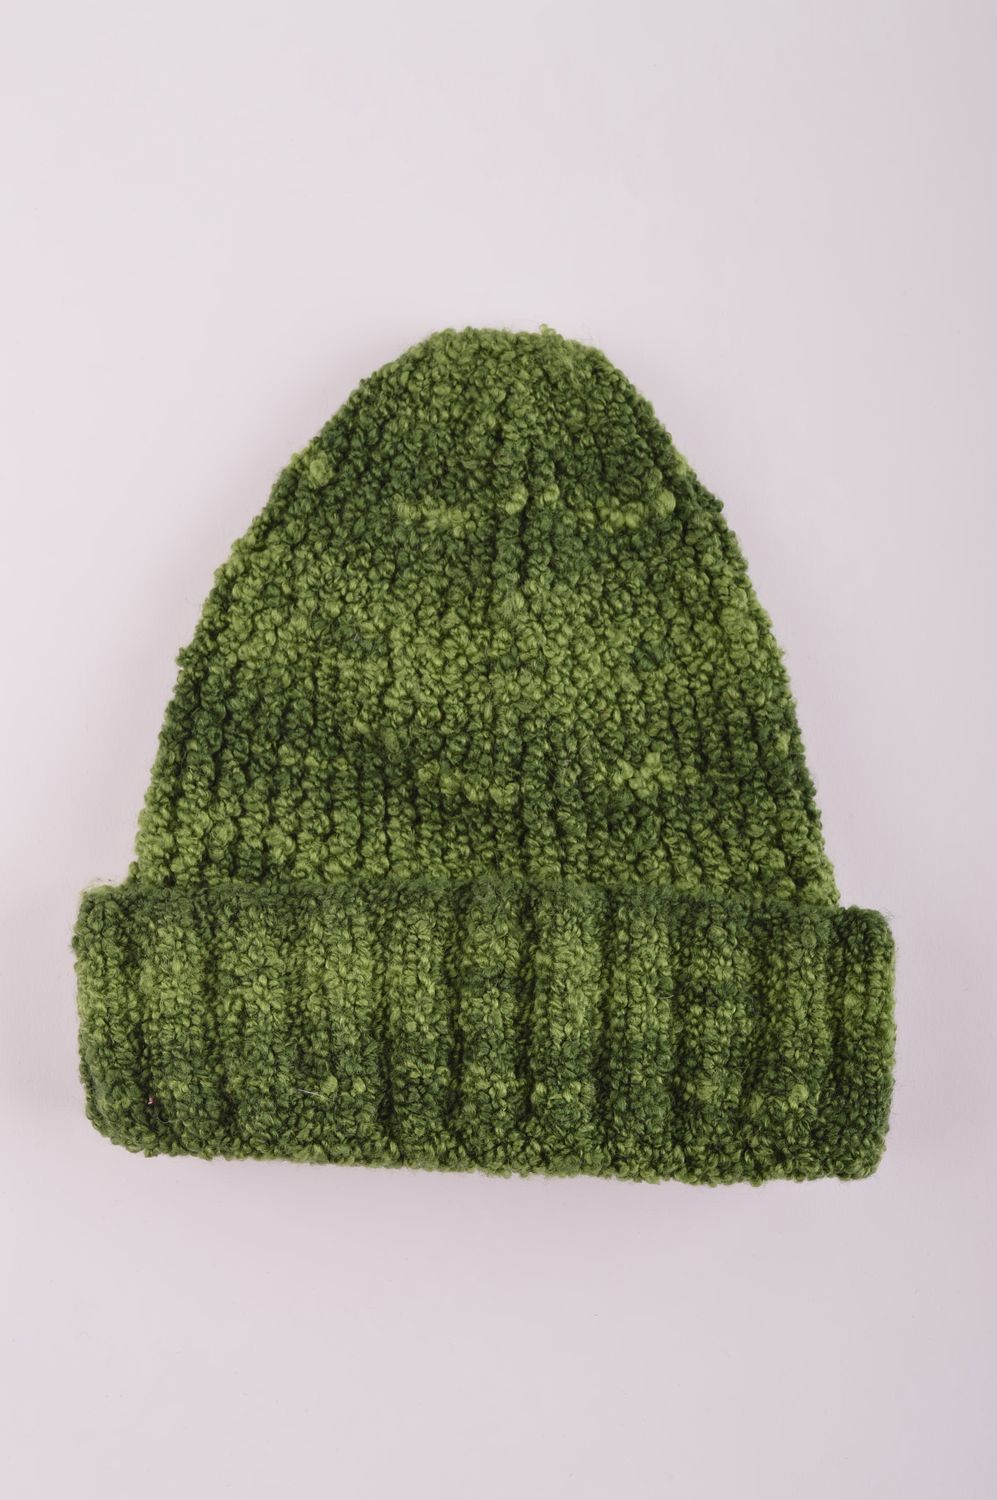 Handmade knitted hat winter hat for women winter hat winter accessories photo 4